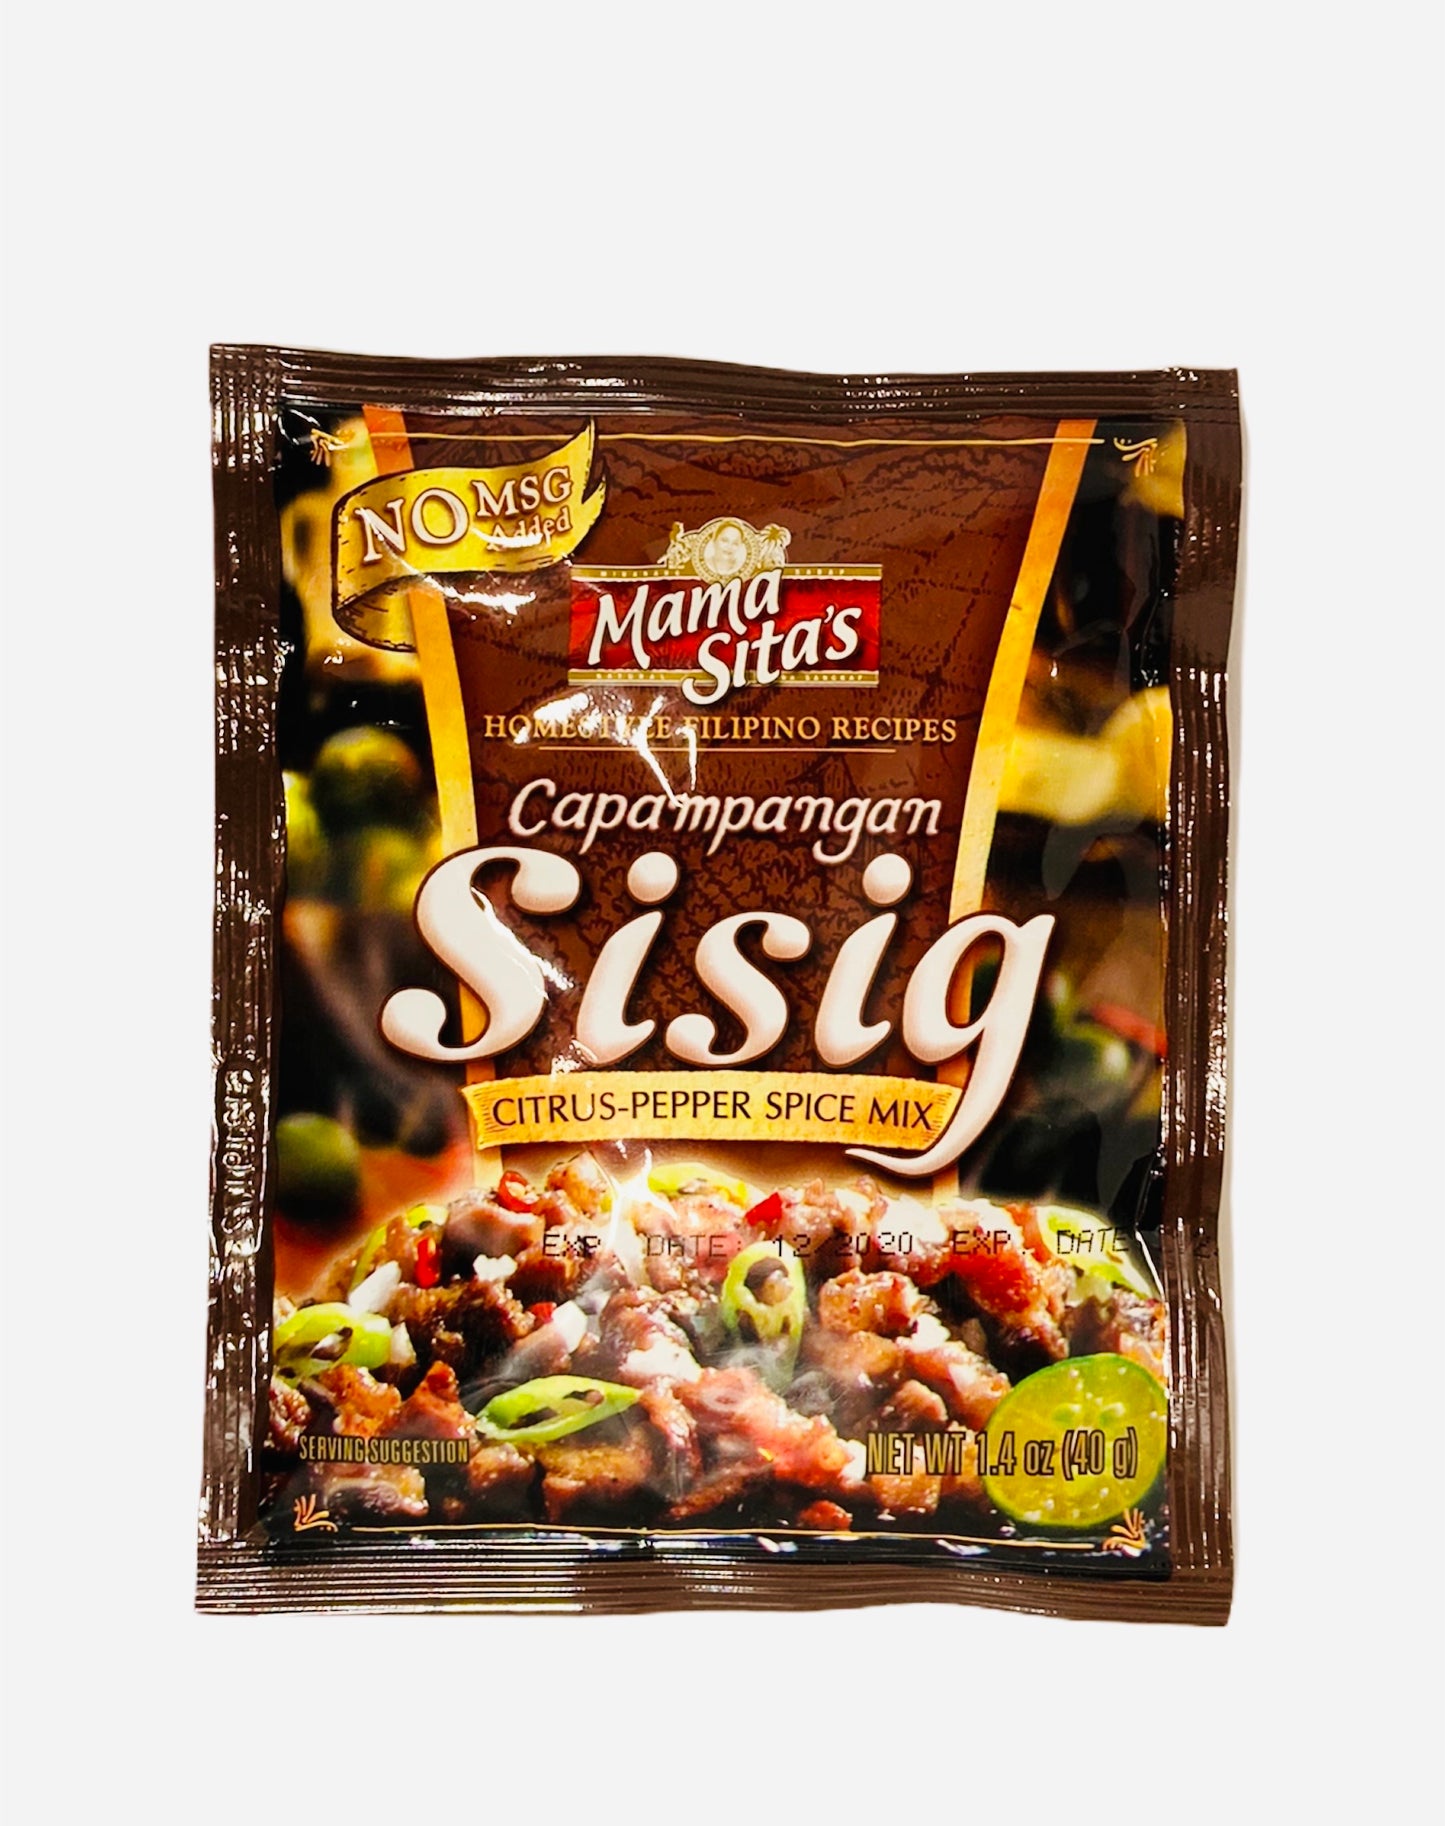 Mama Sita’s Capampangan Sisig Citrus-Pepper Spice Mix